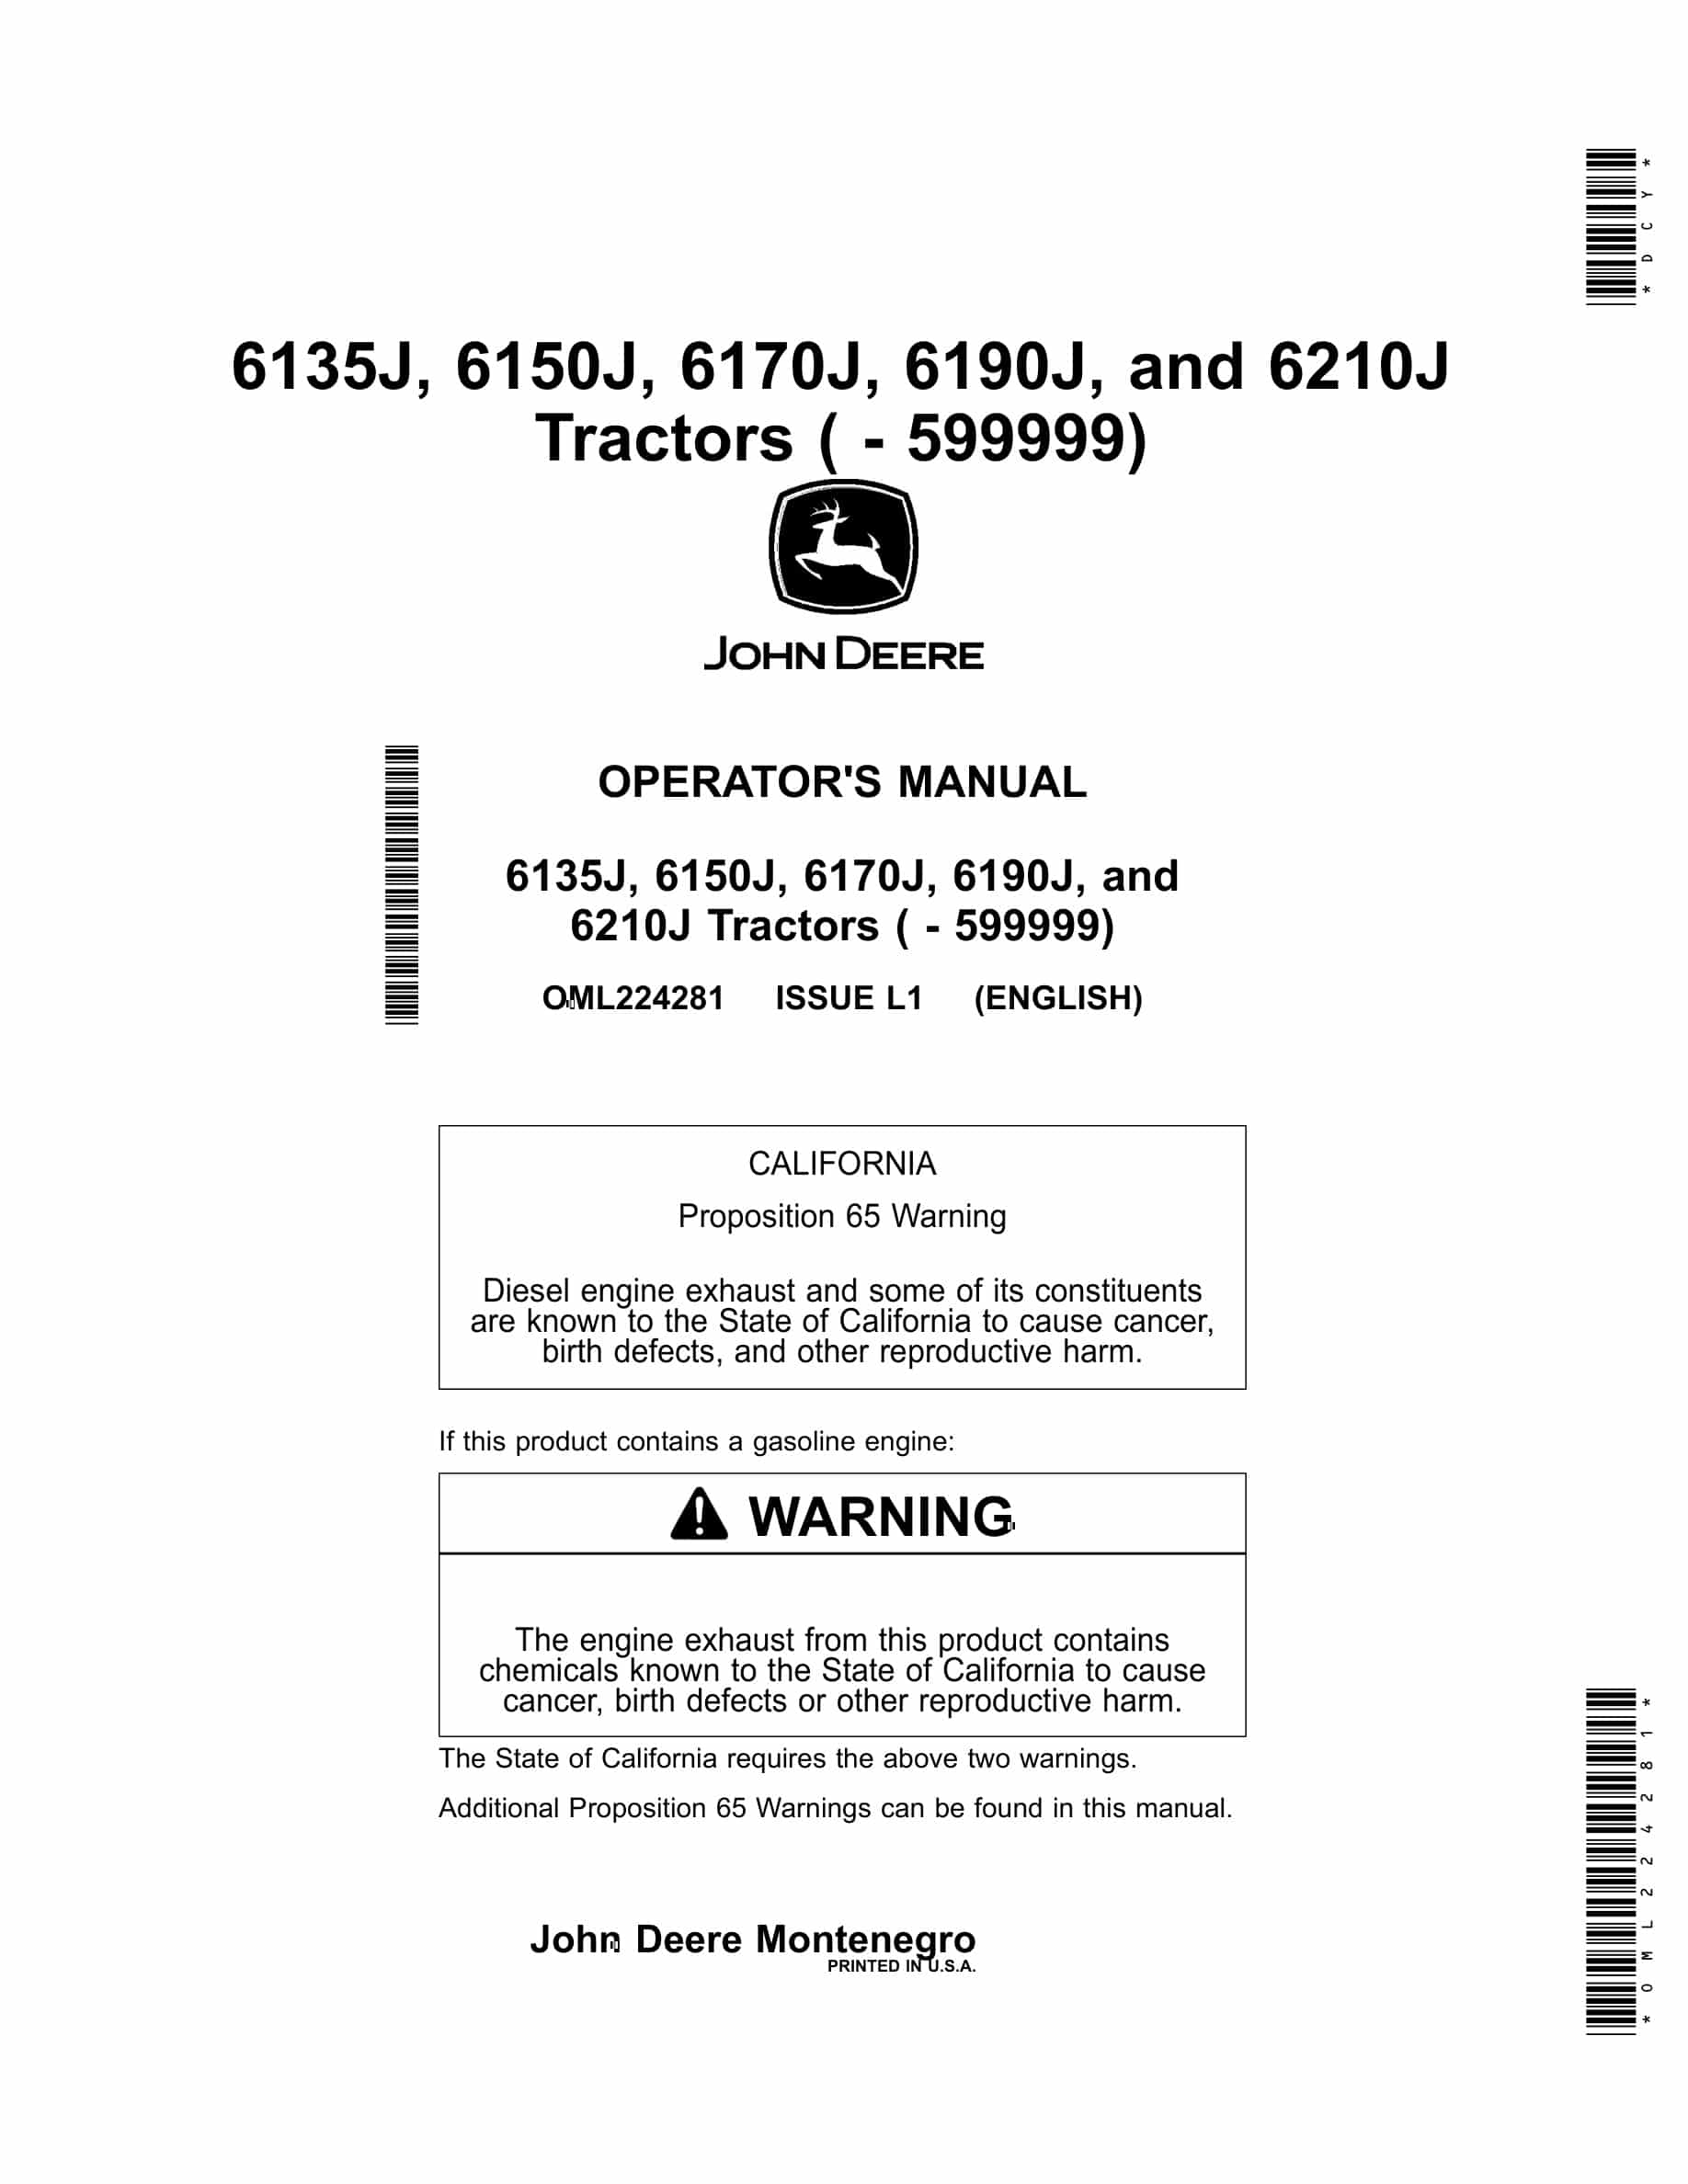 John Deere 6135j, 6150j, 6170j, 6190j 6210j Tractors Operator Manuals OML224281-1